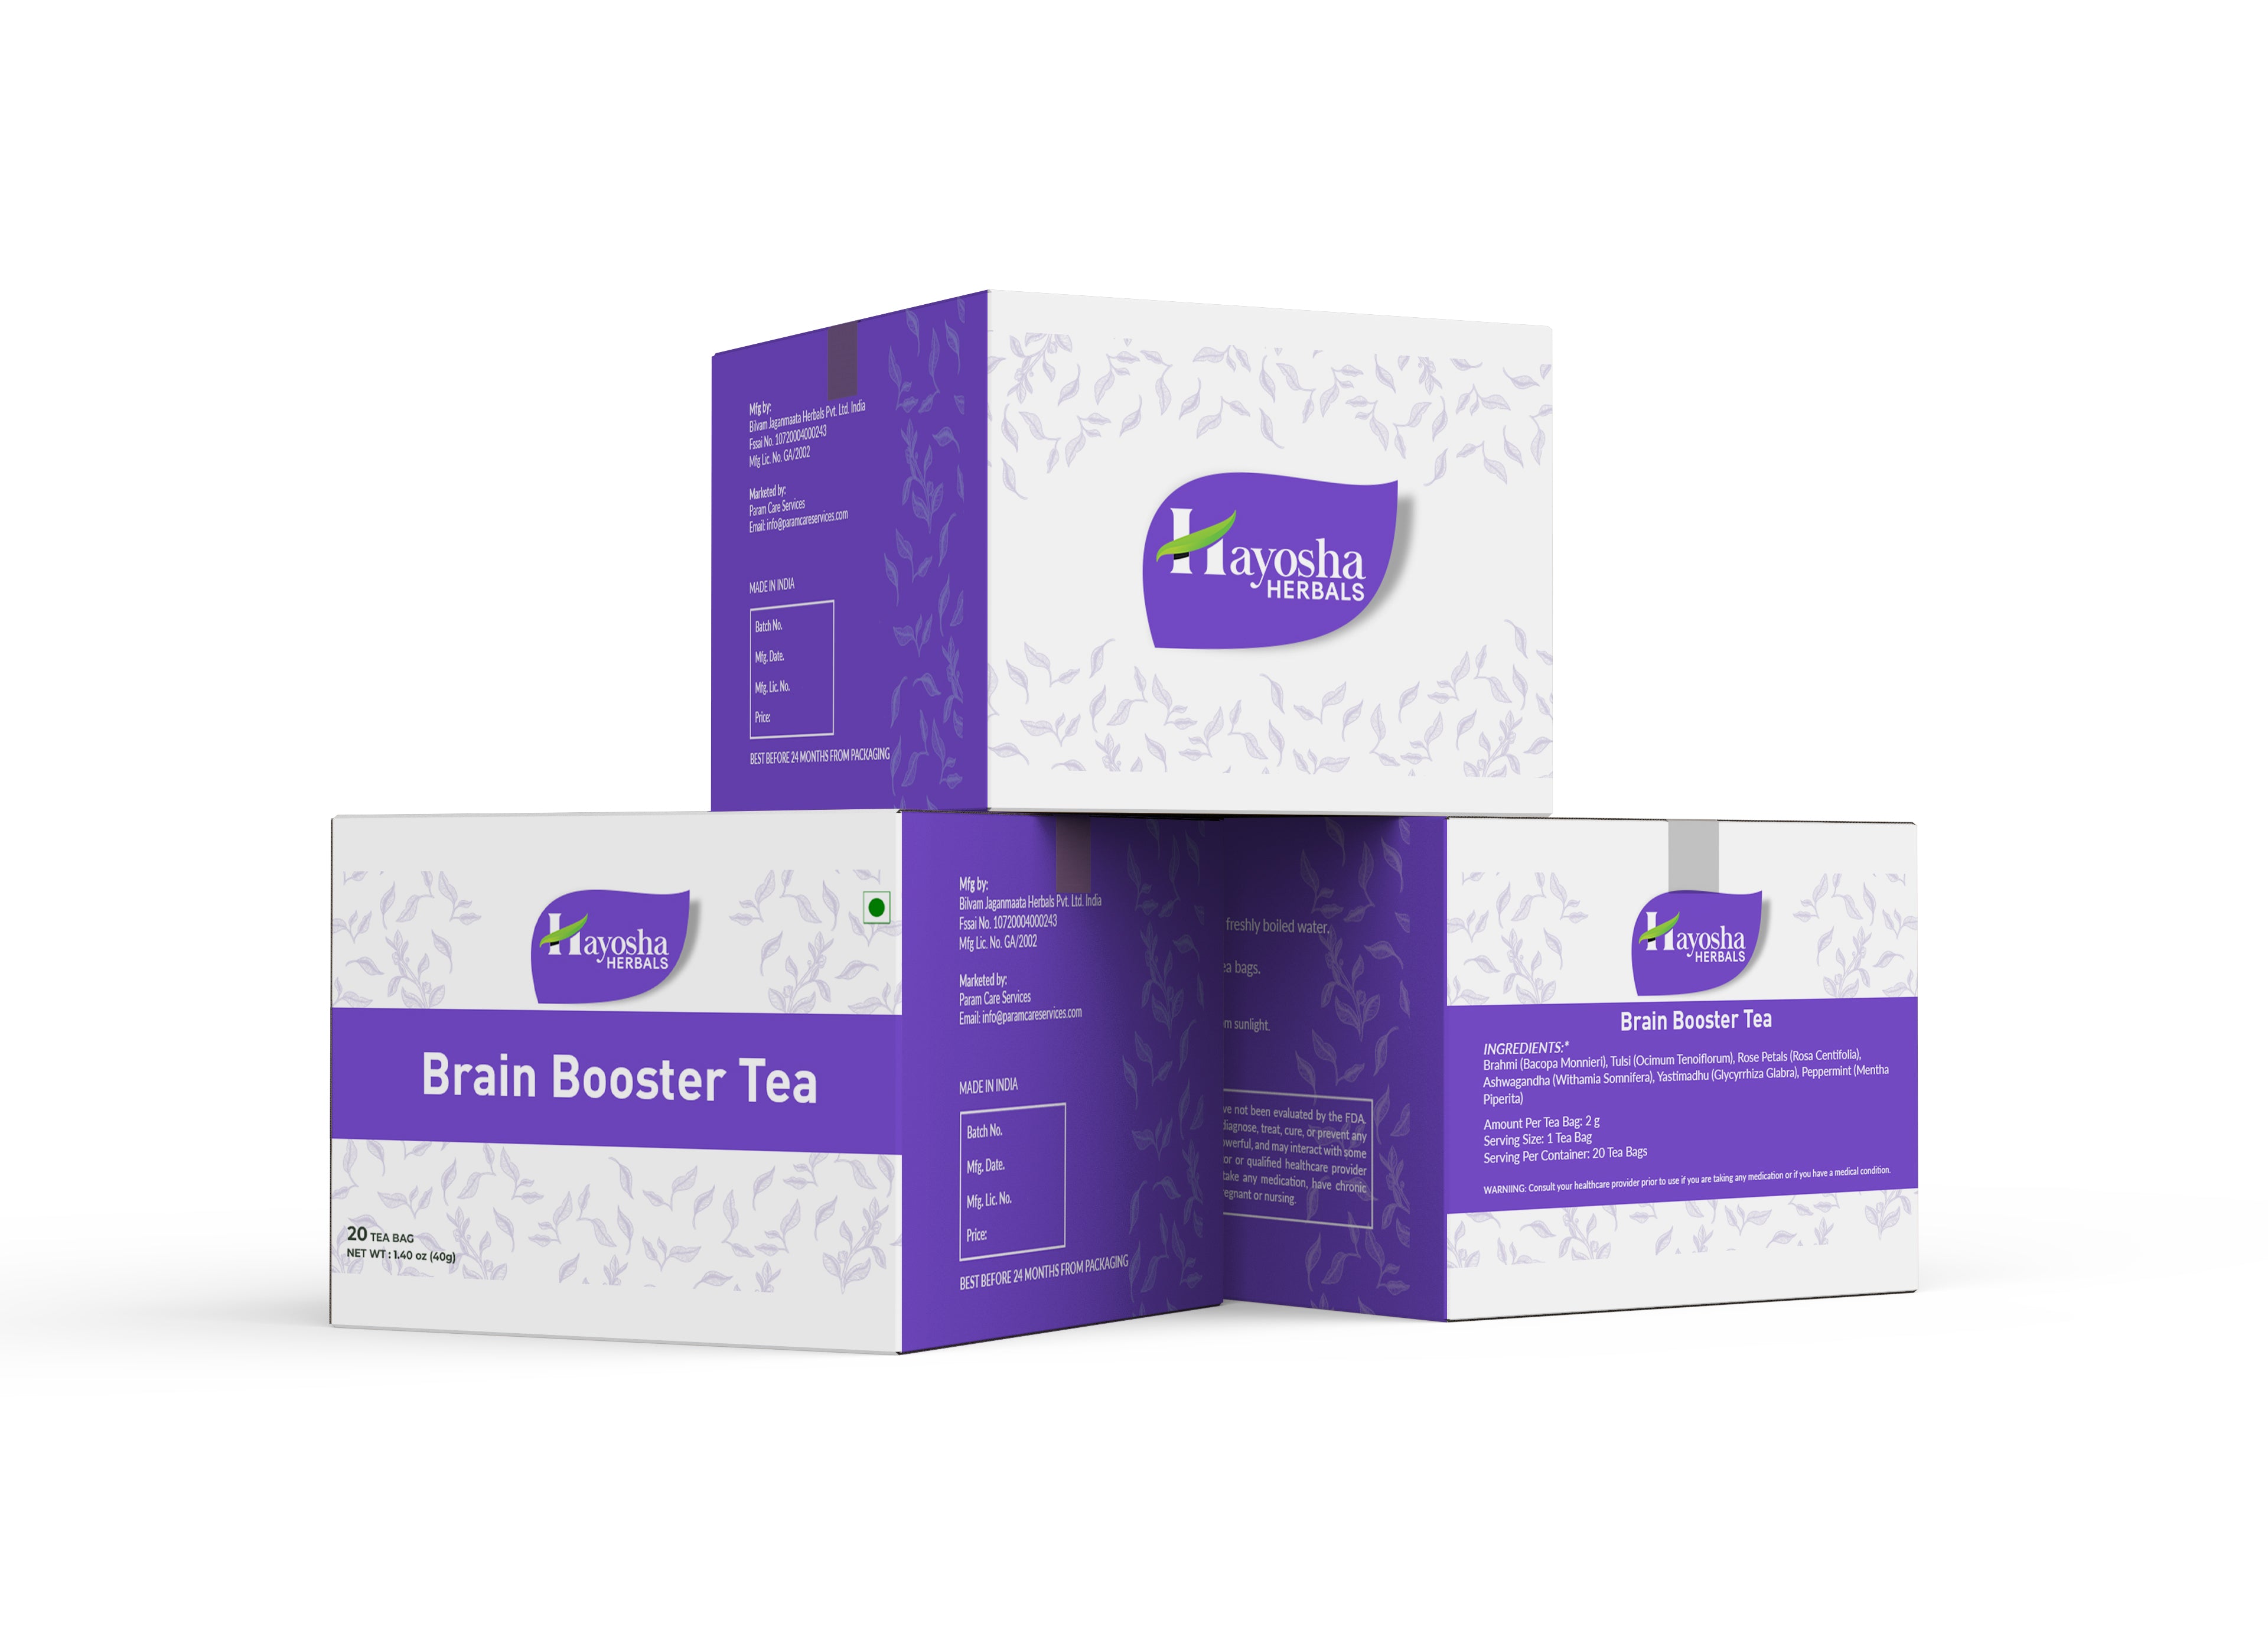 Hayosha Herbals - Brain Booster Tea